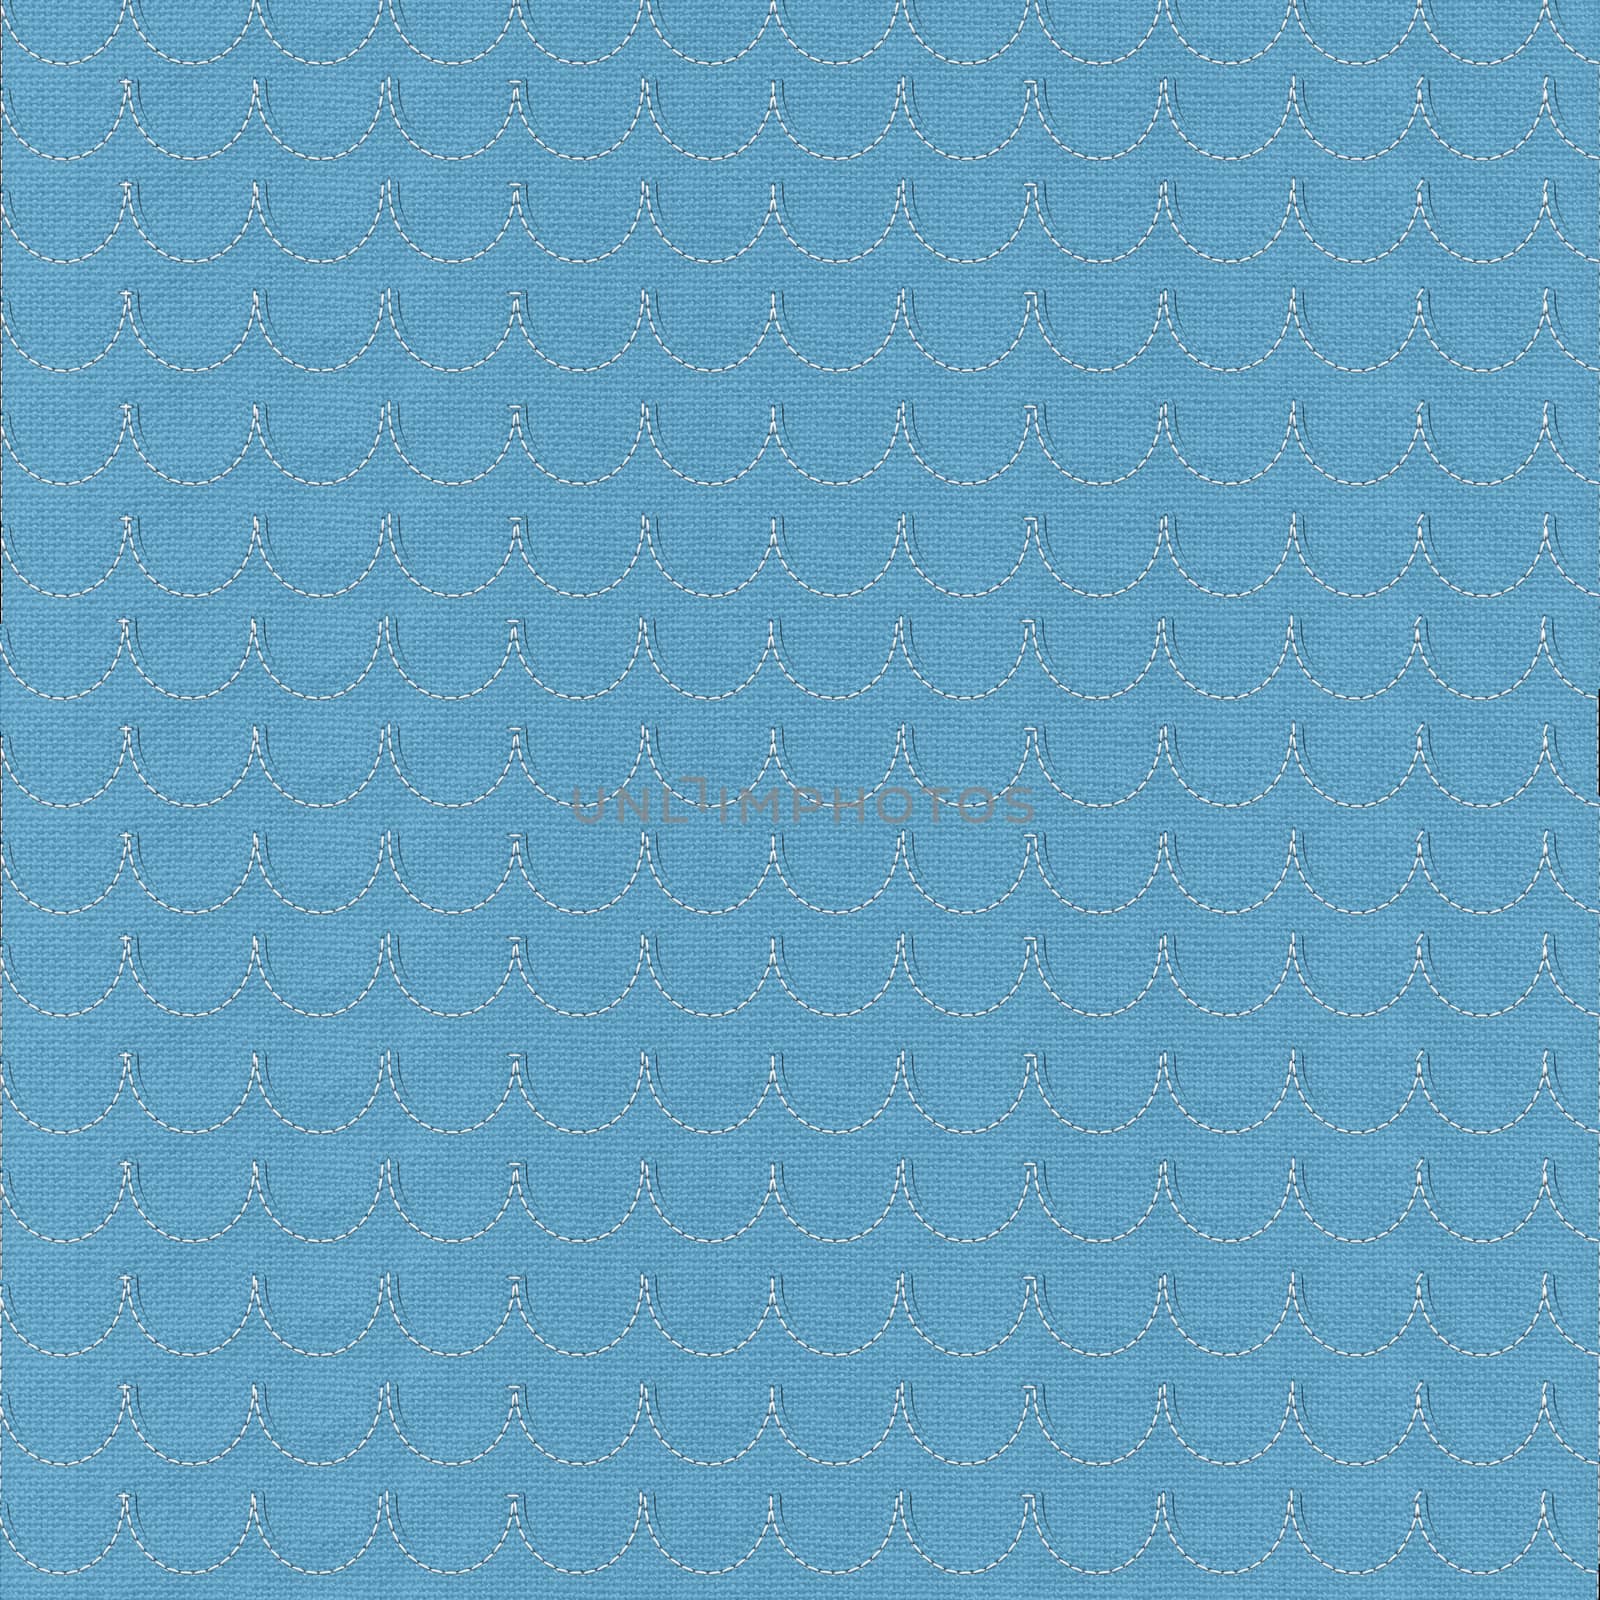 Sea seem with stitch style on fabric background by basketman23